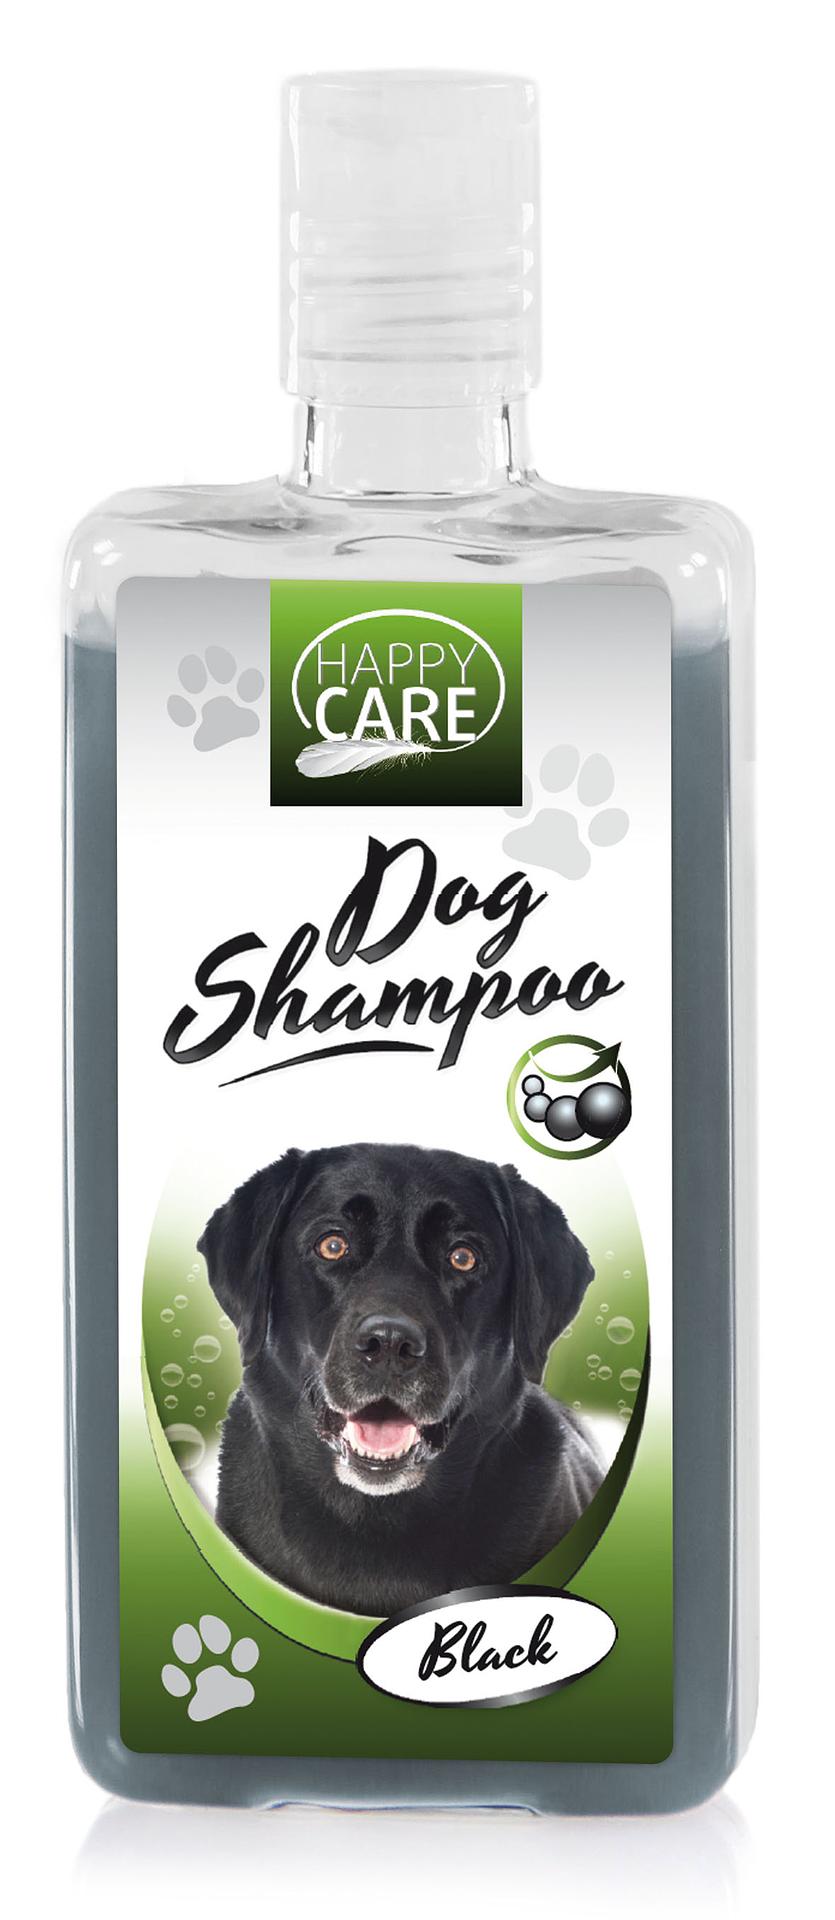 Happy Care Black Coat shampooing pour chiens, 250ml